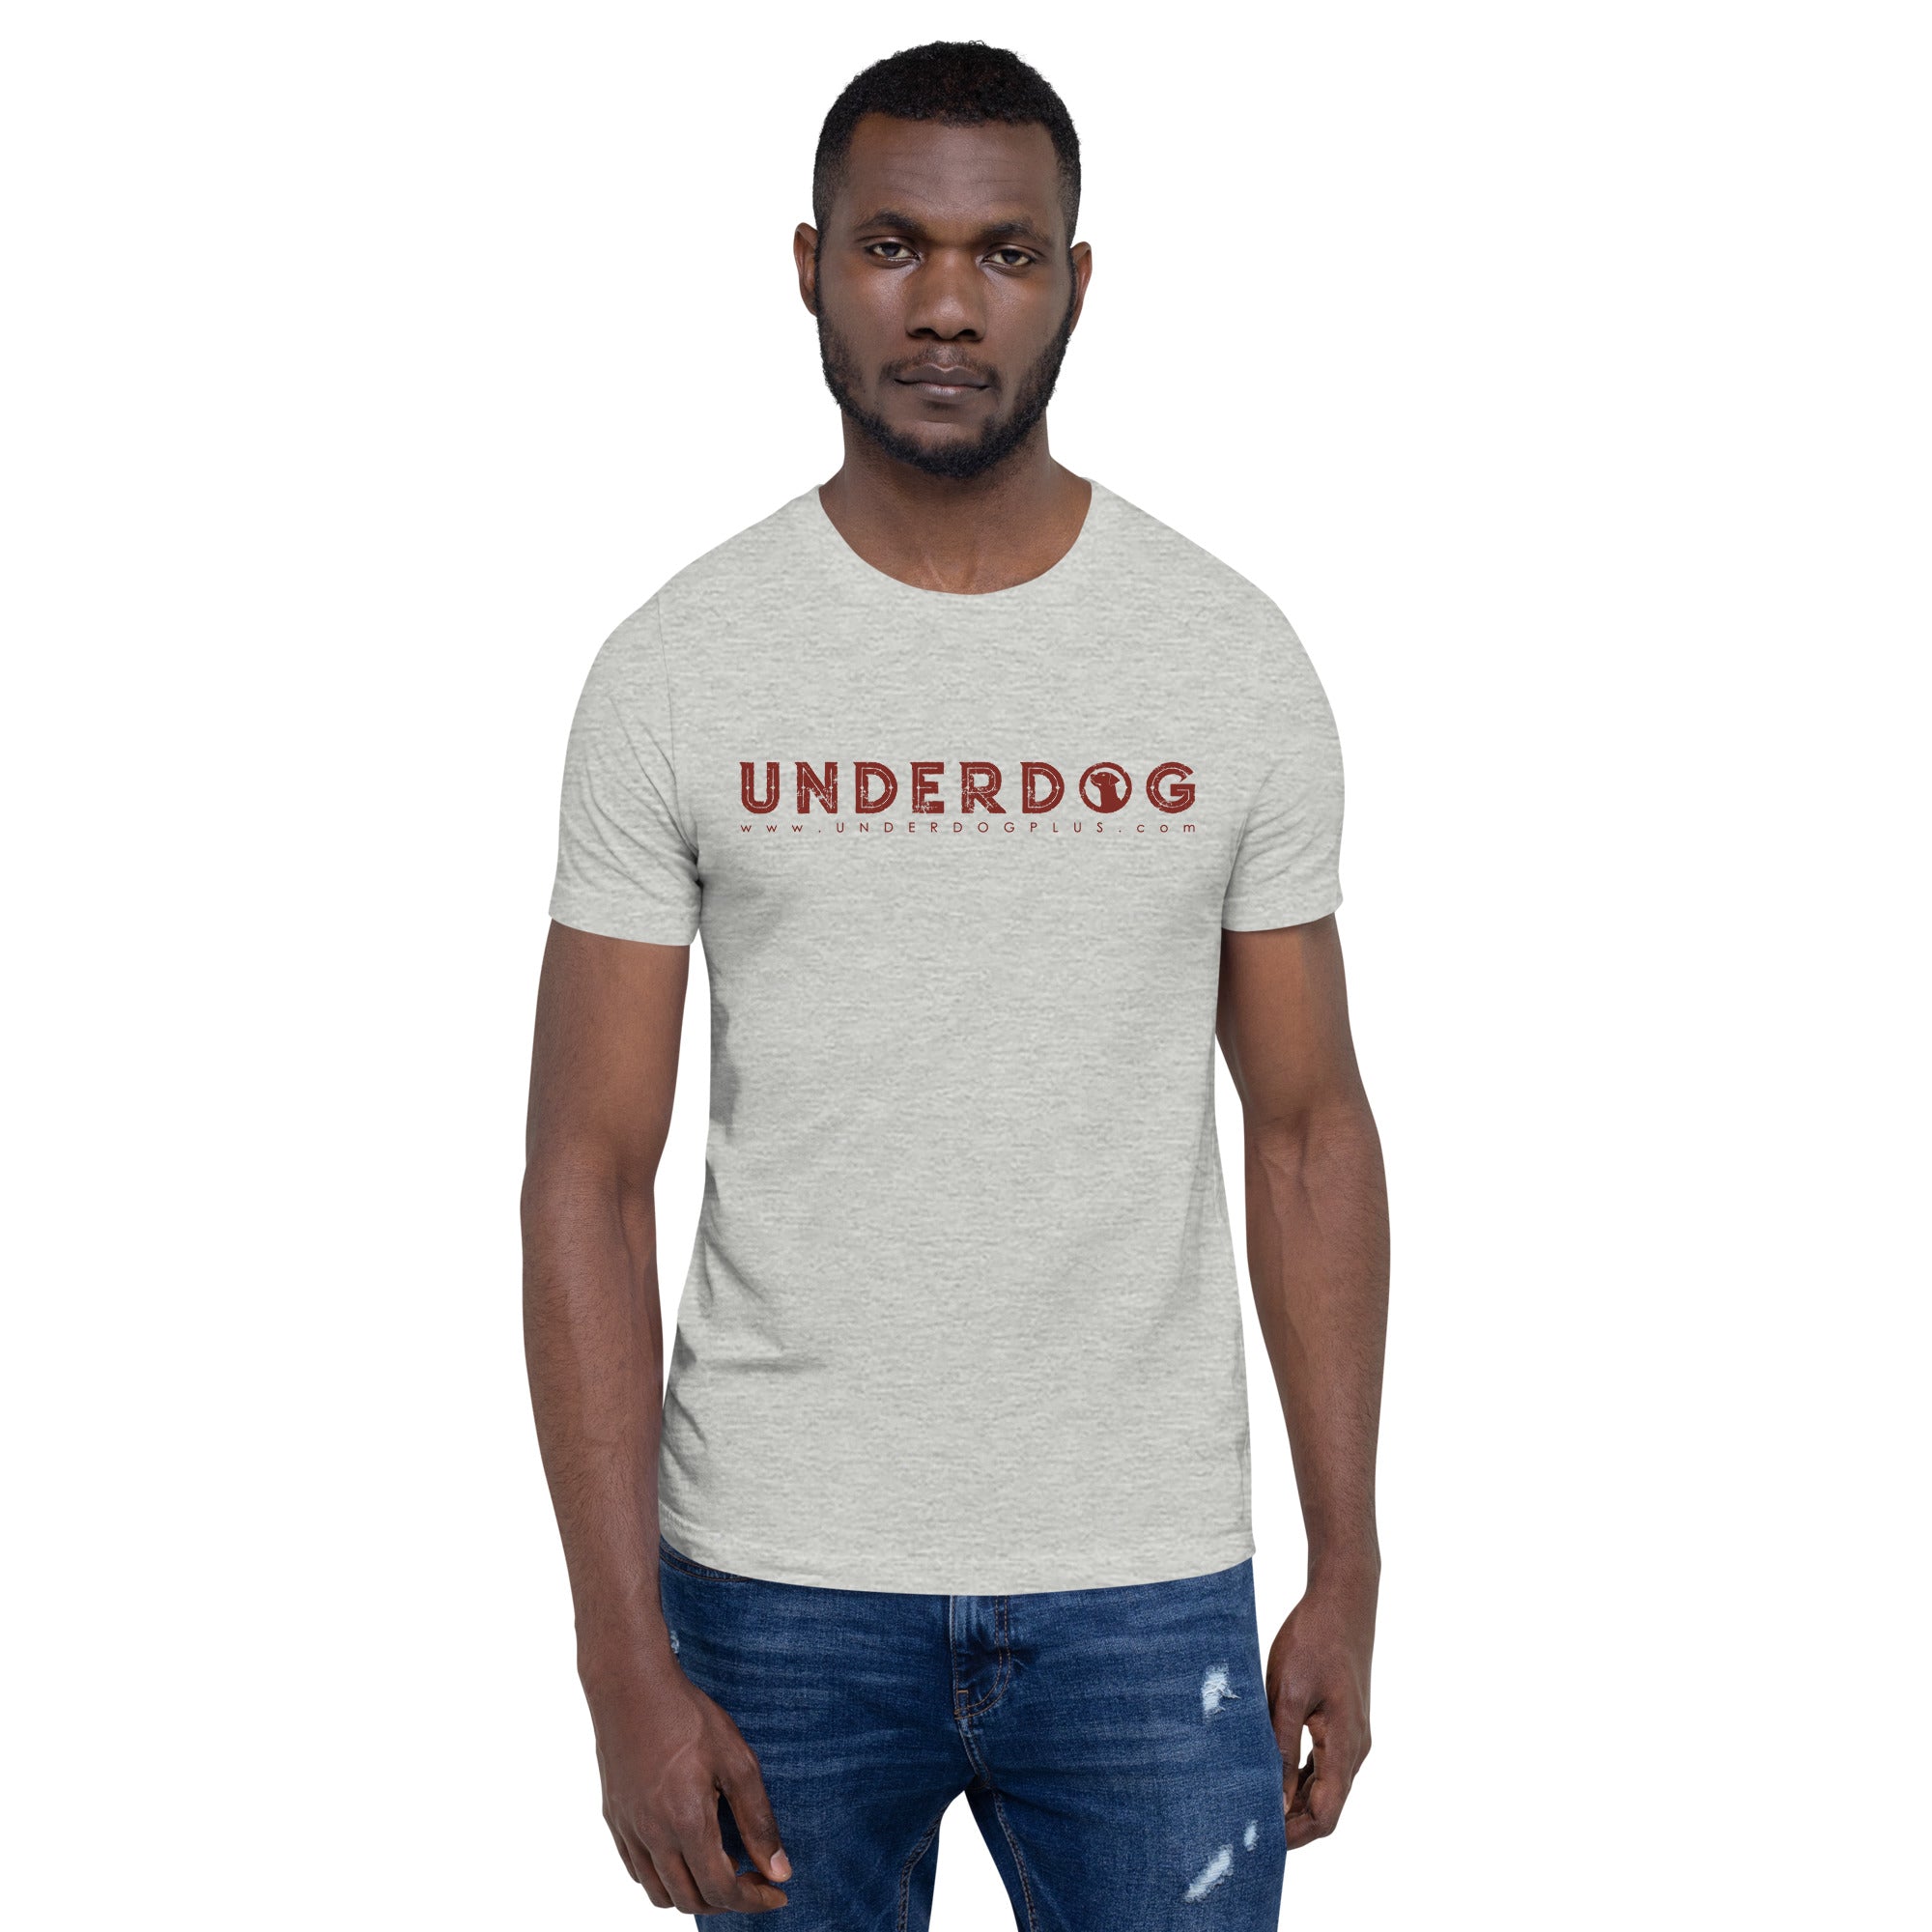 Underdog Red on Light T-Shirt